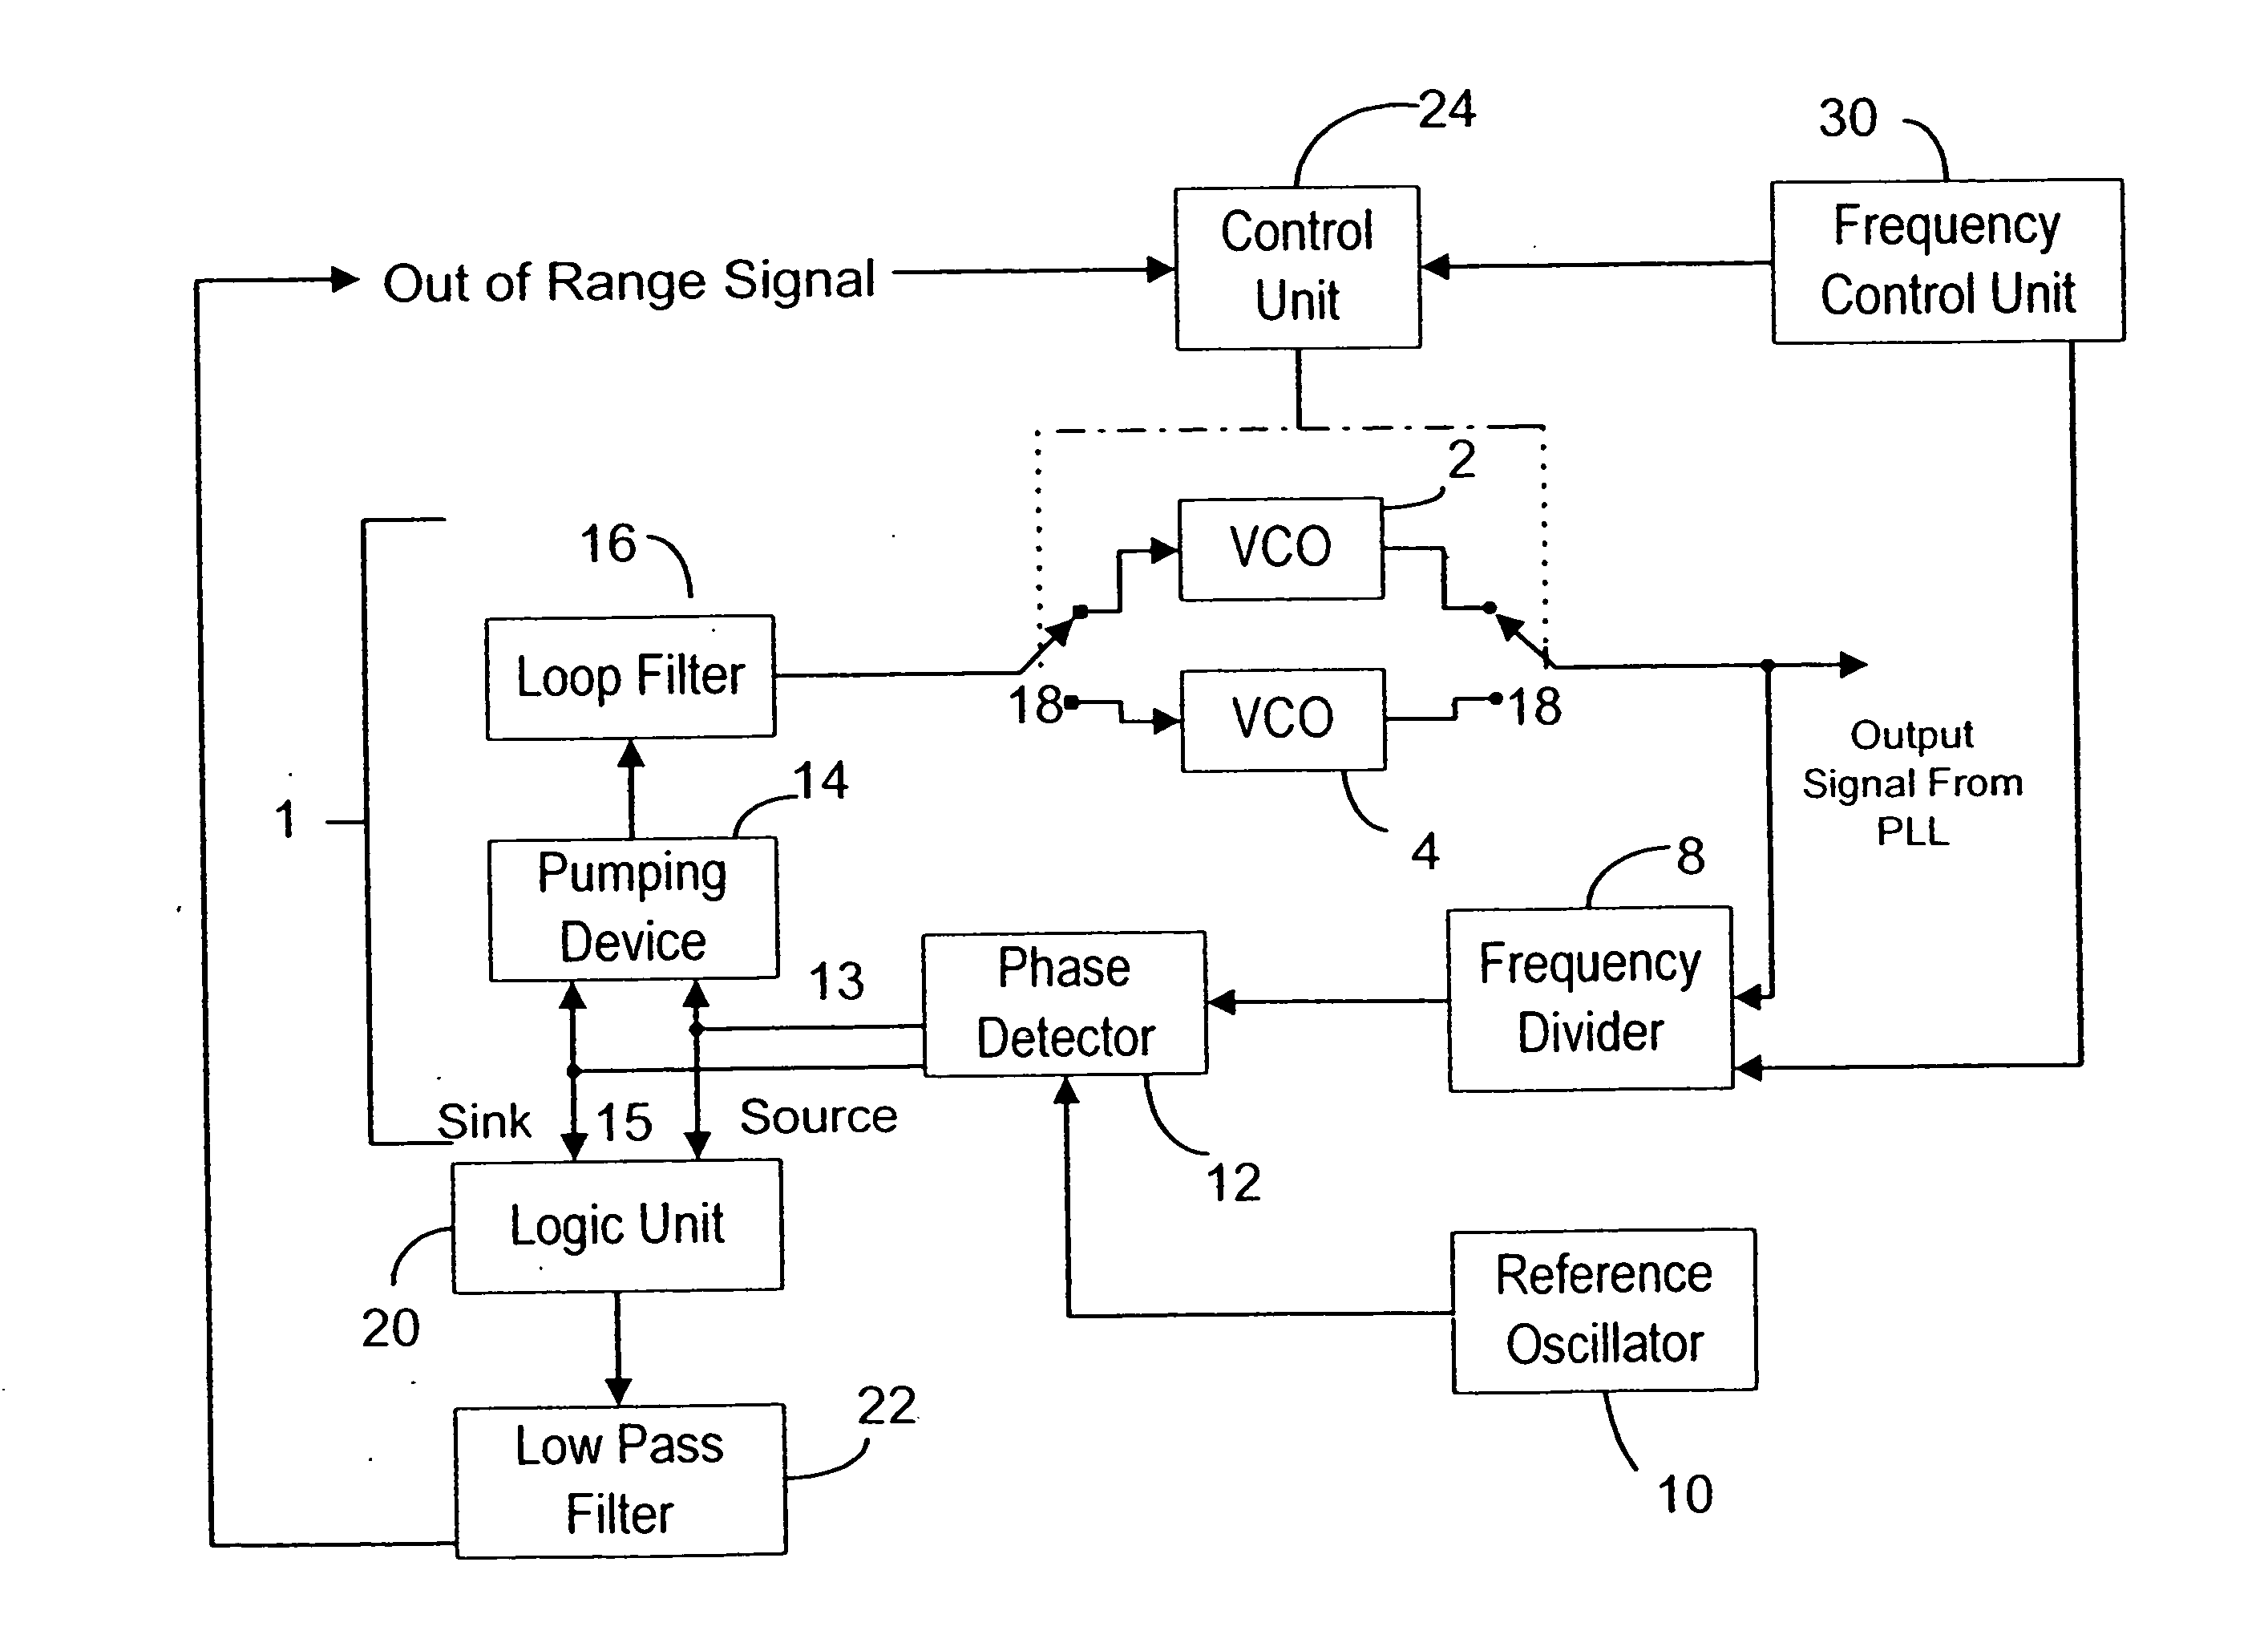 Radio transceiver having a phase-locked loop circuit